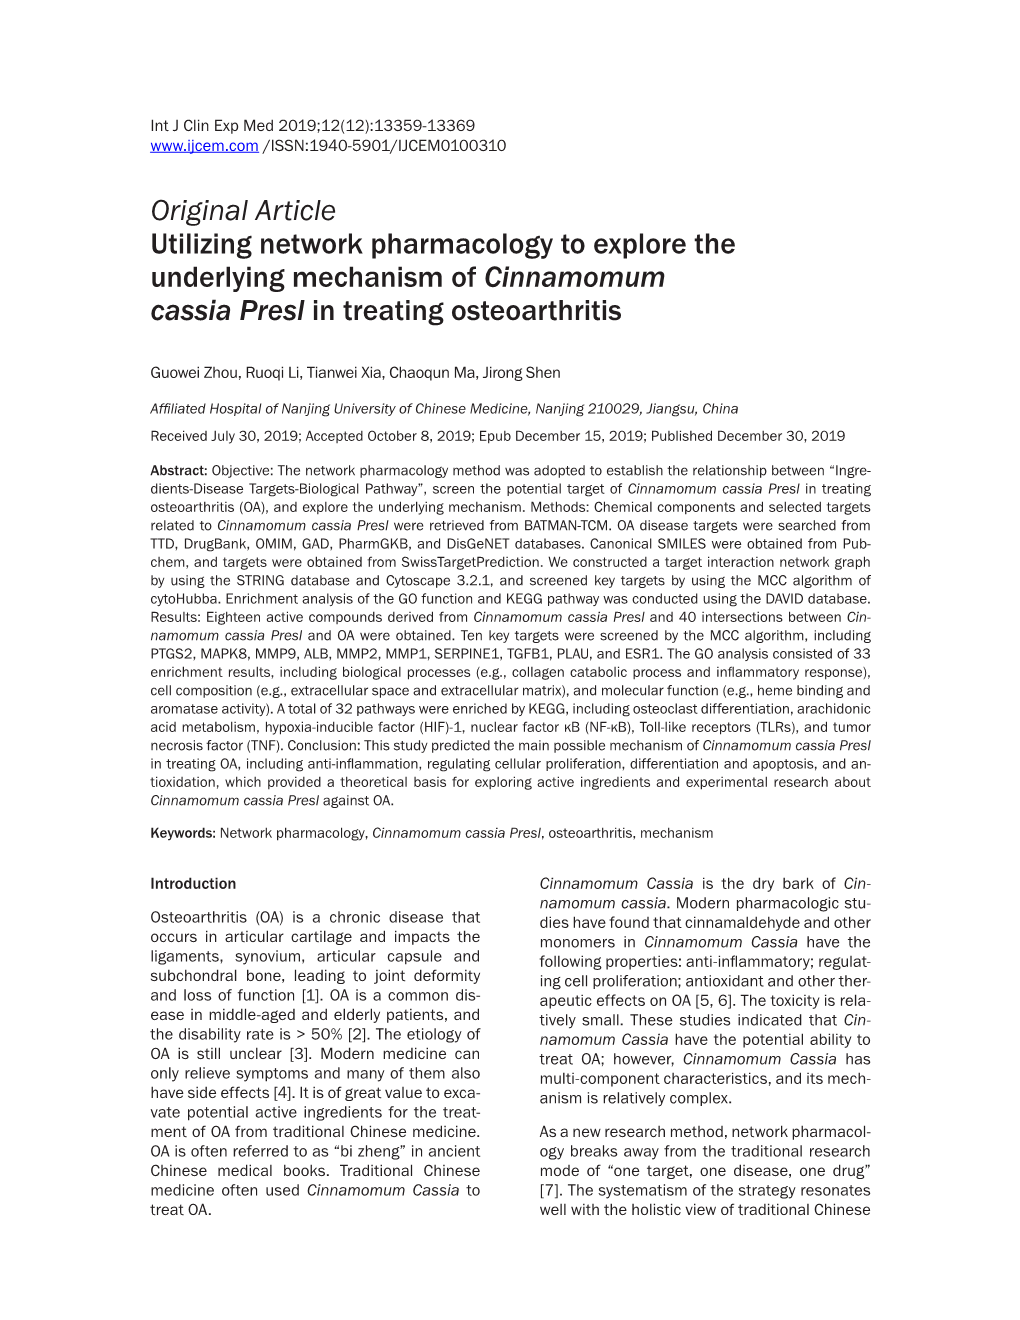 Original Article Utilizing Network Pharmacology to Explore the Underlying Mechanism of Cinnamomum Cassia Presl in Treating Osteoarthritis